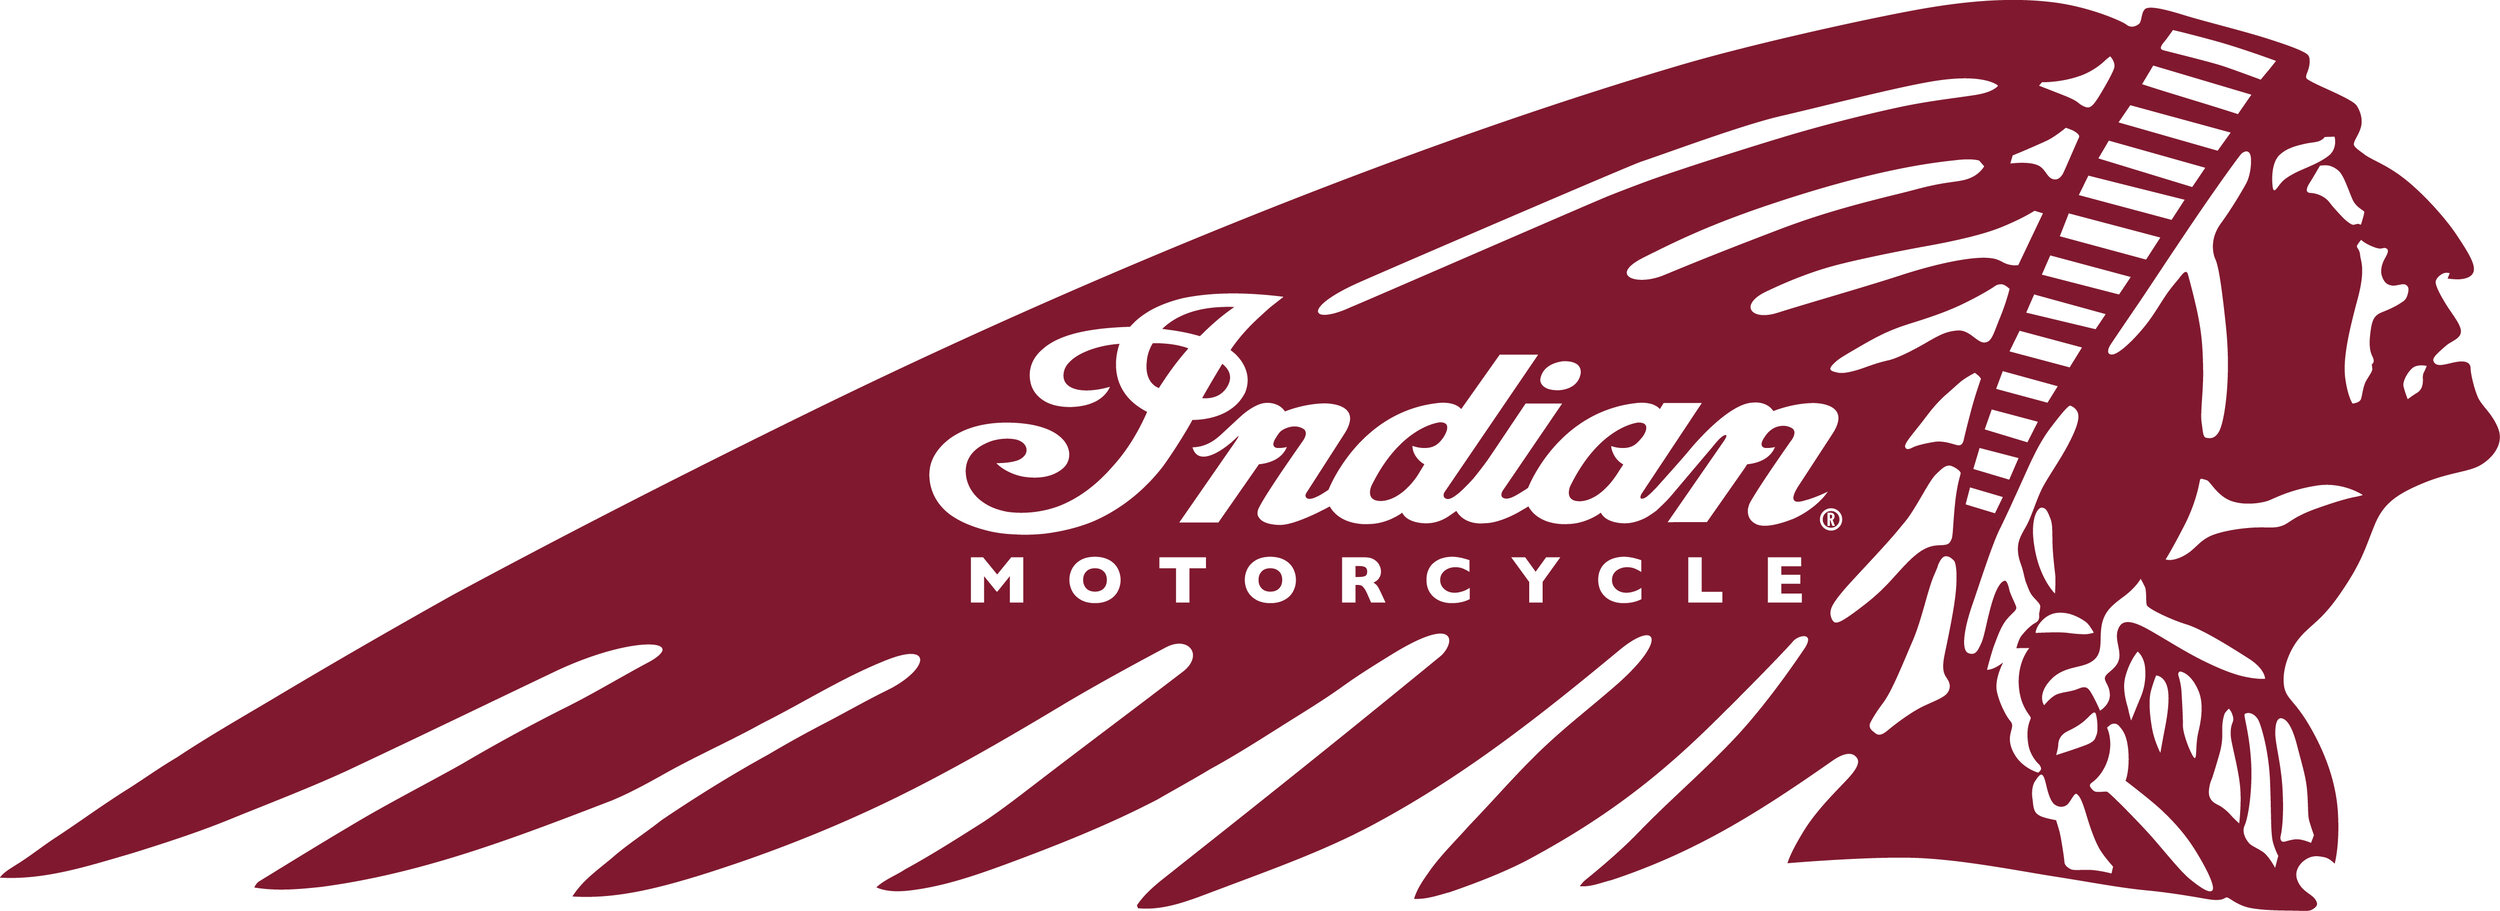 Indian Motorcycle Headdress logo.jpg